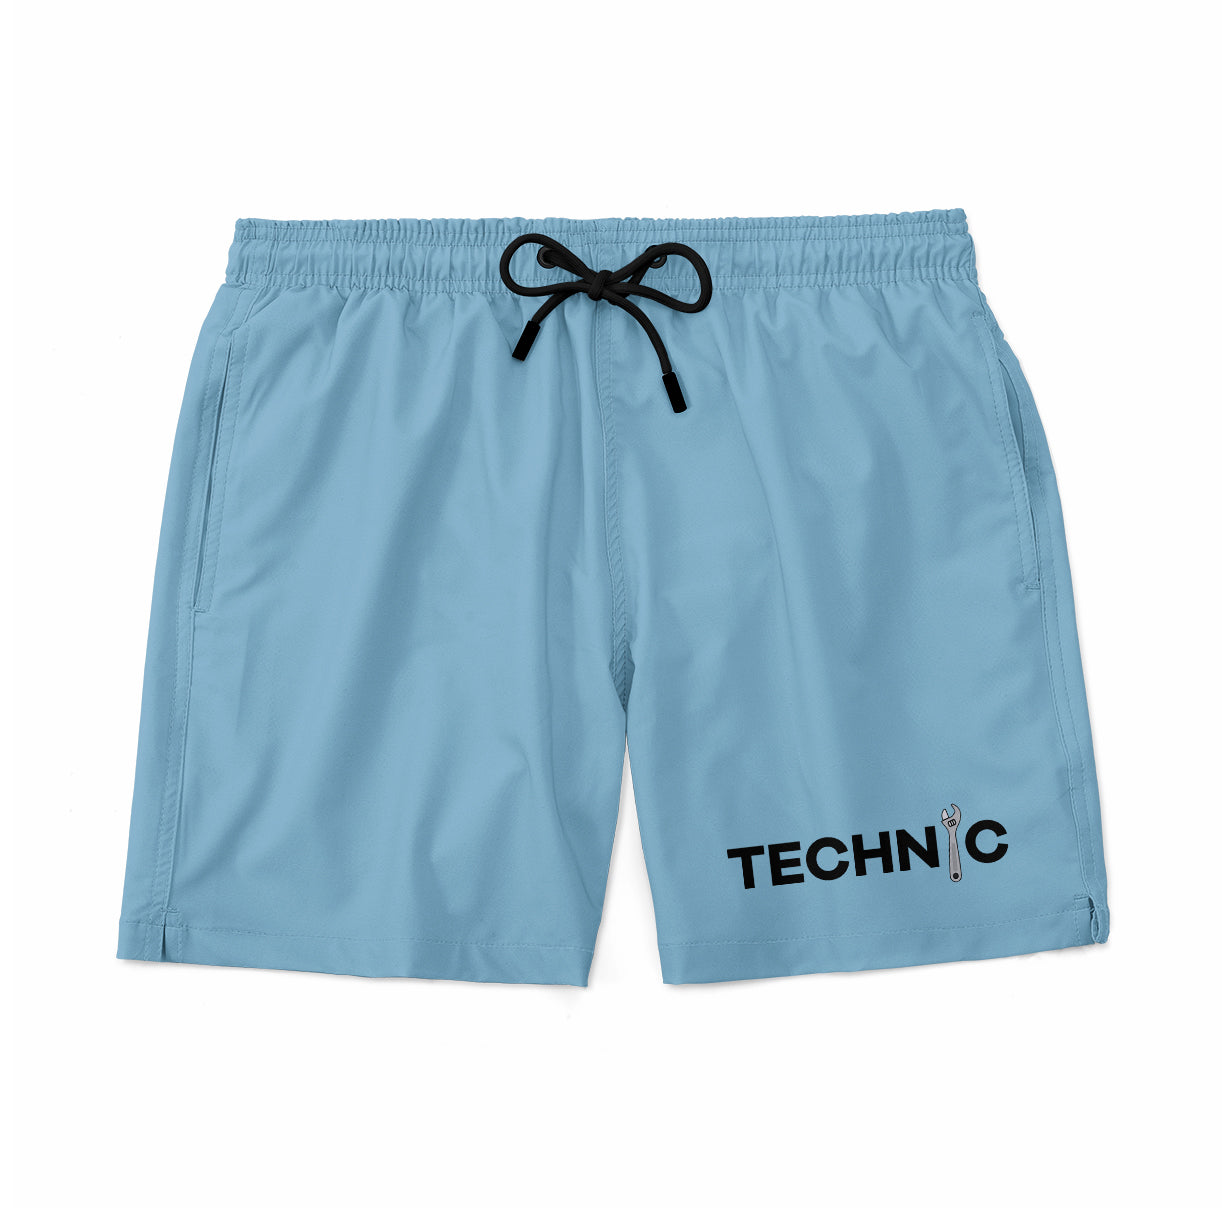 Technic Designed Swim Trunks & Shorts